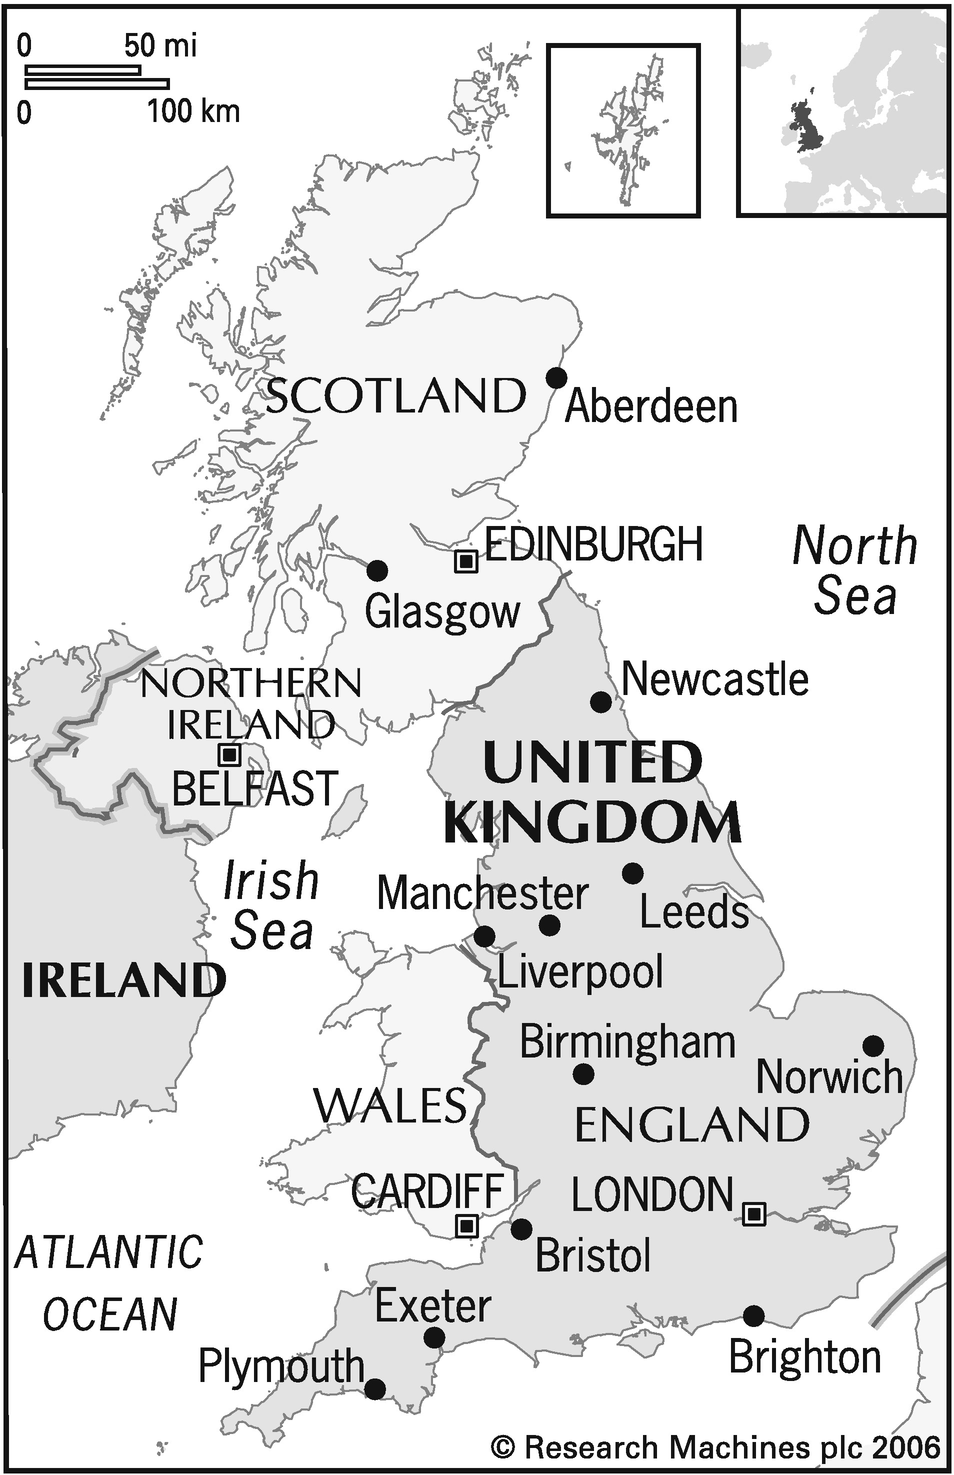 United Kingdom of Great Britain and Northern Ireland | SpringerLink